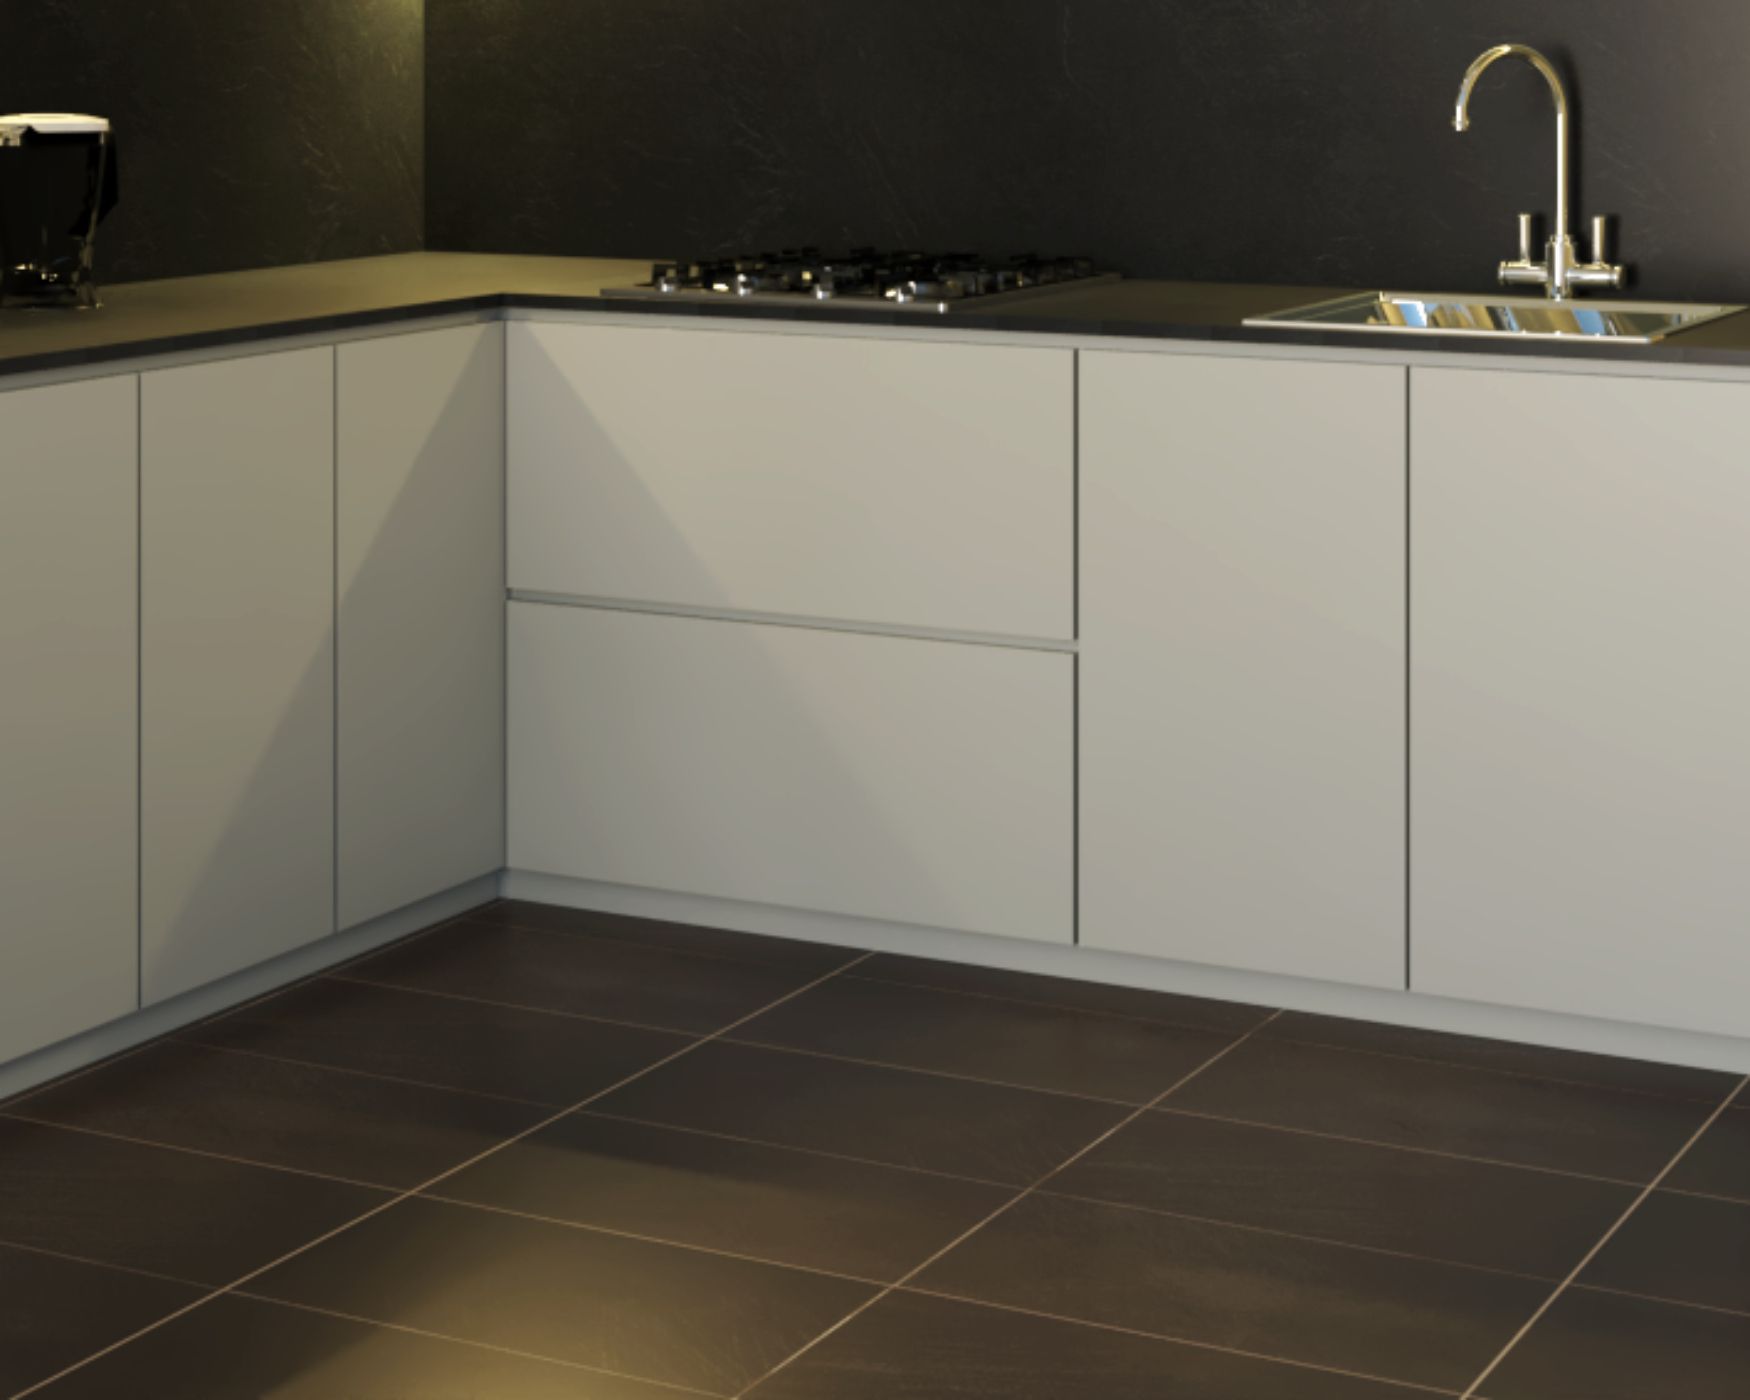 Rectangular Dark Grey Floor Tiles Design For Kitchens